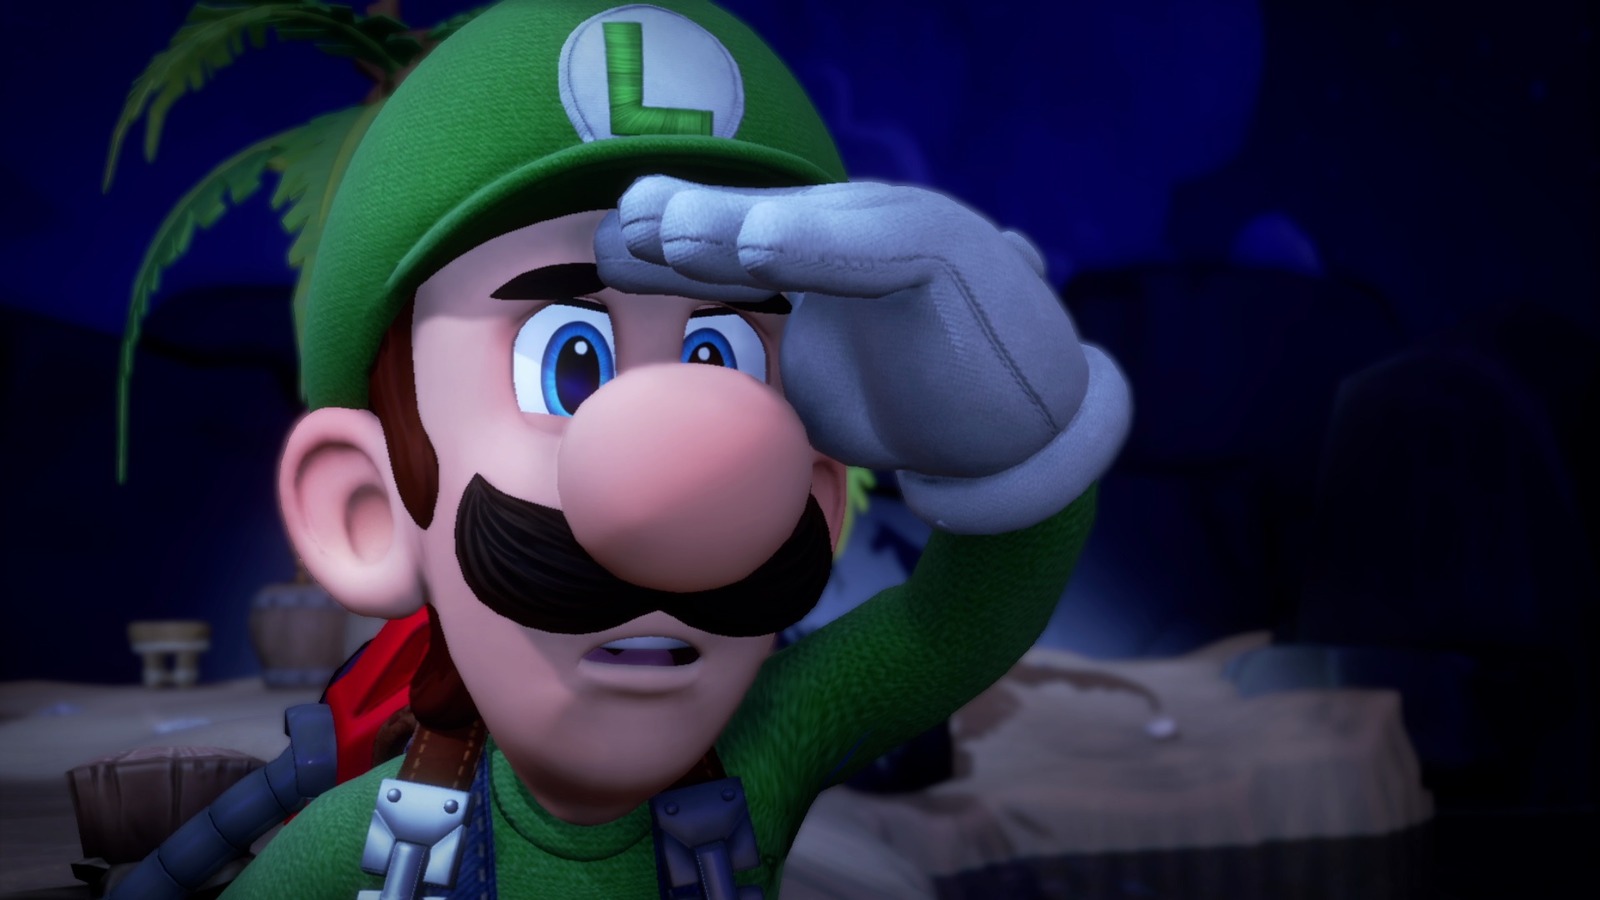 Detail Images Of Luigi And Mario Nomer 36